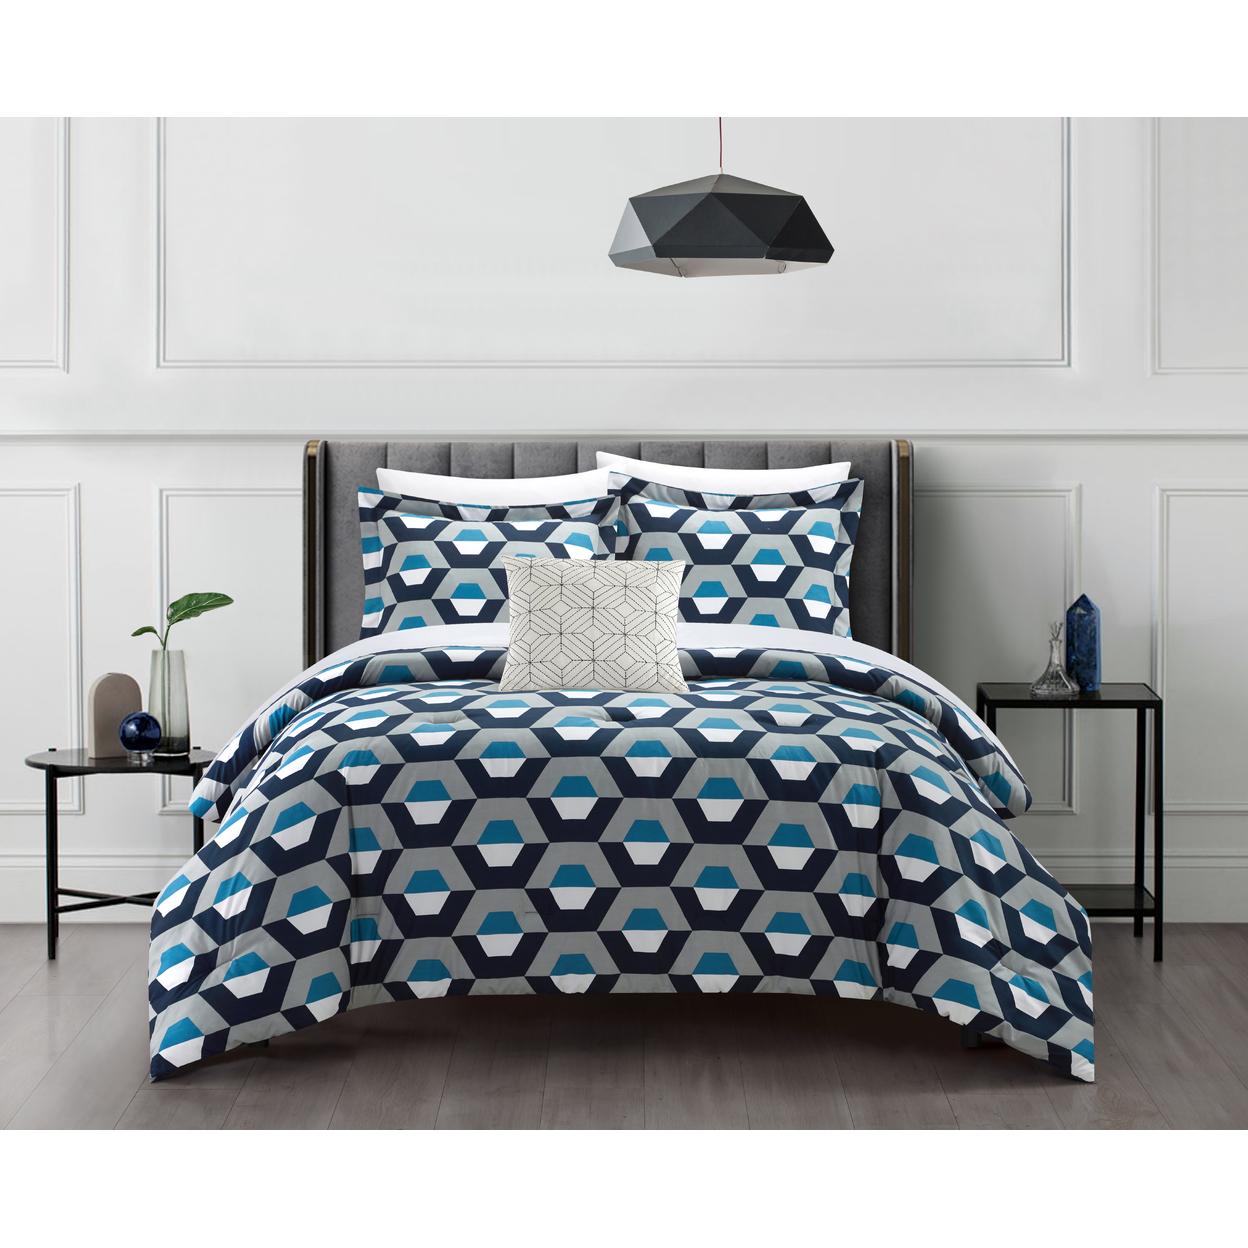 Matheus 4 Or 3 Piece Comforter Set Contemporary Geometric Hexagon Pattern Print Design Bedding - Blue, King - 4 Piece